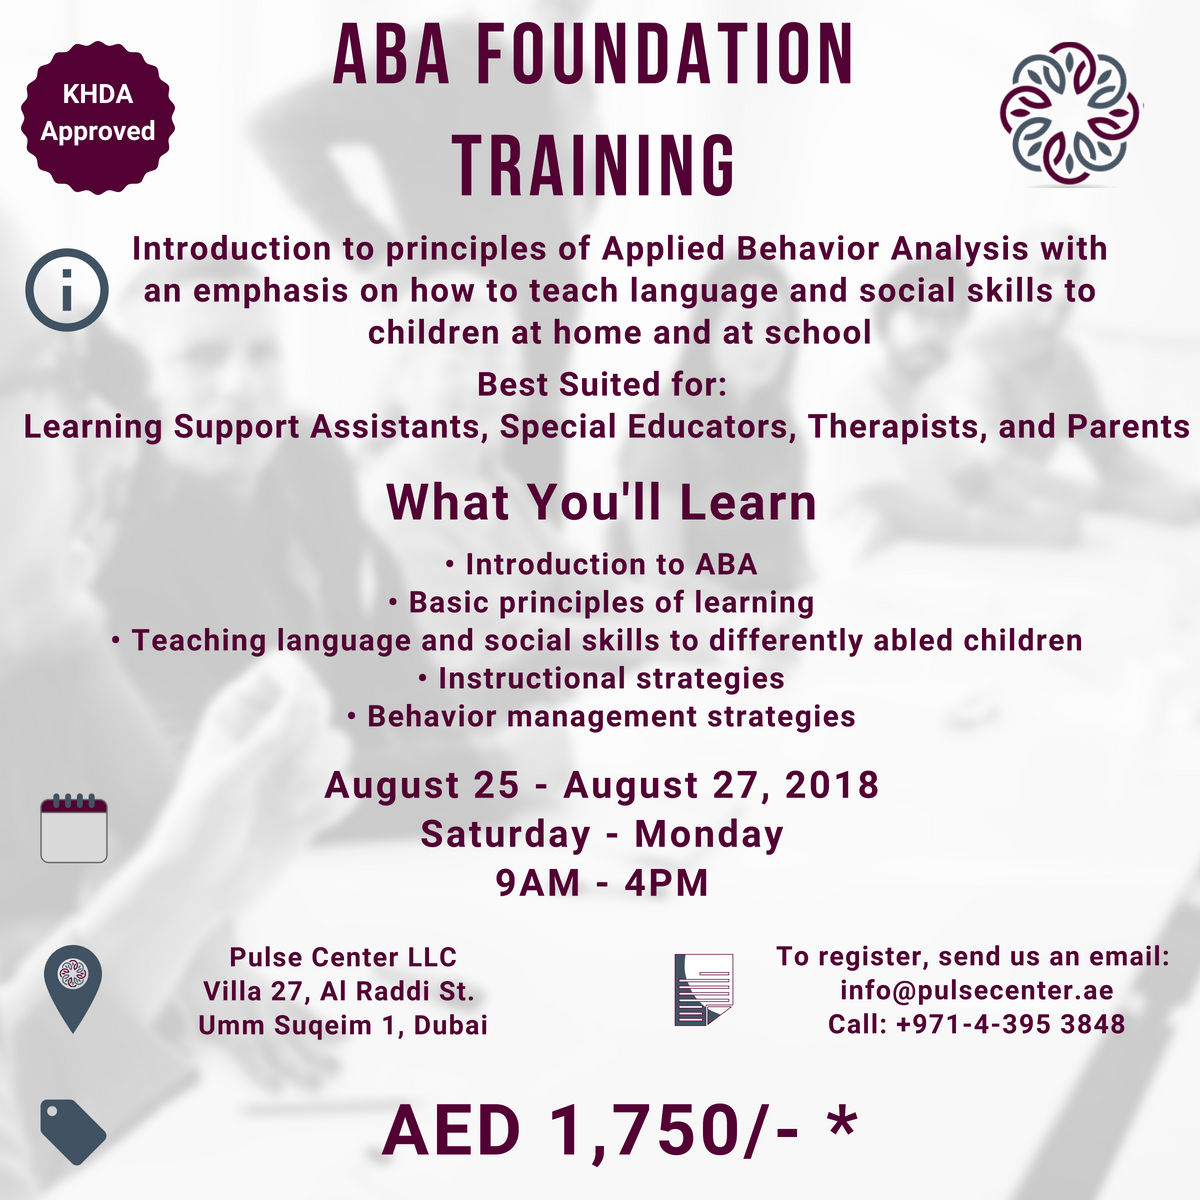 ABA Foundation Training - KHDA approved